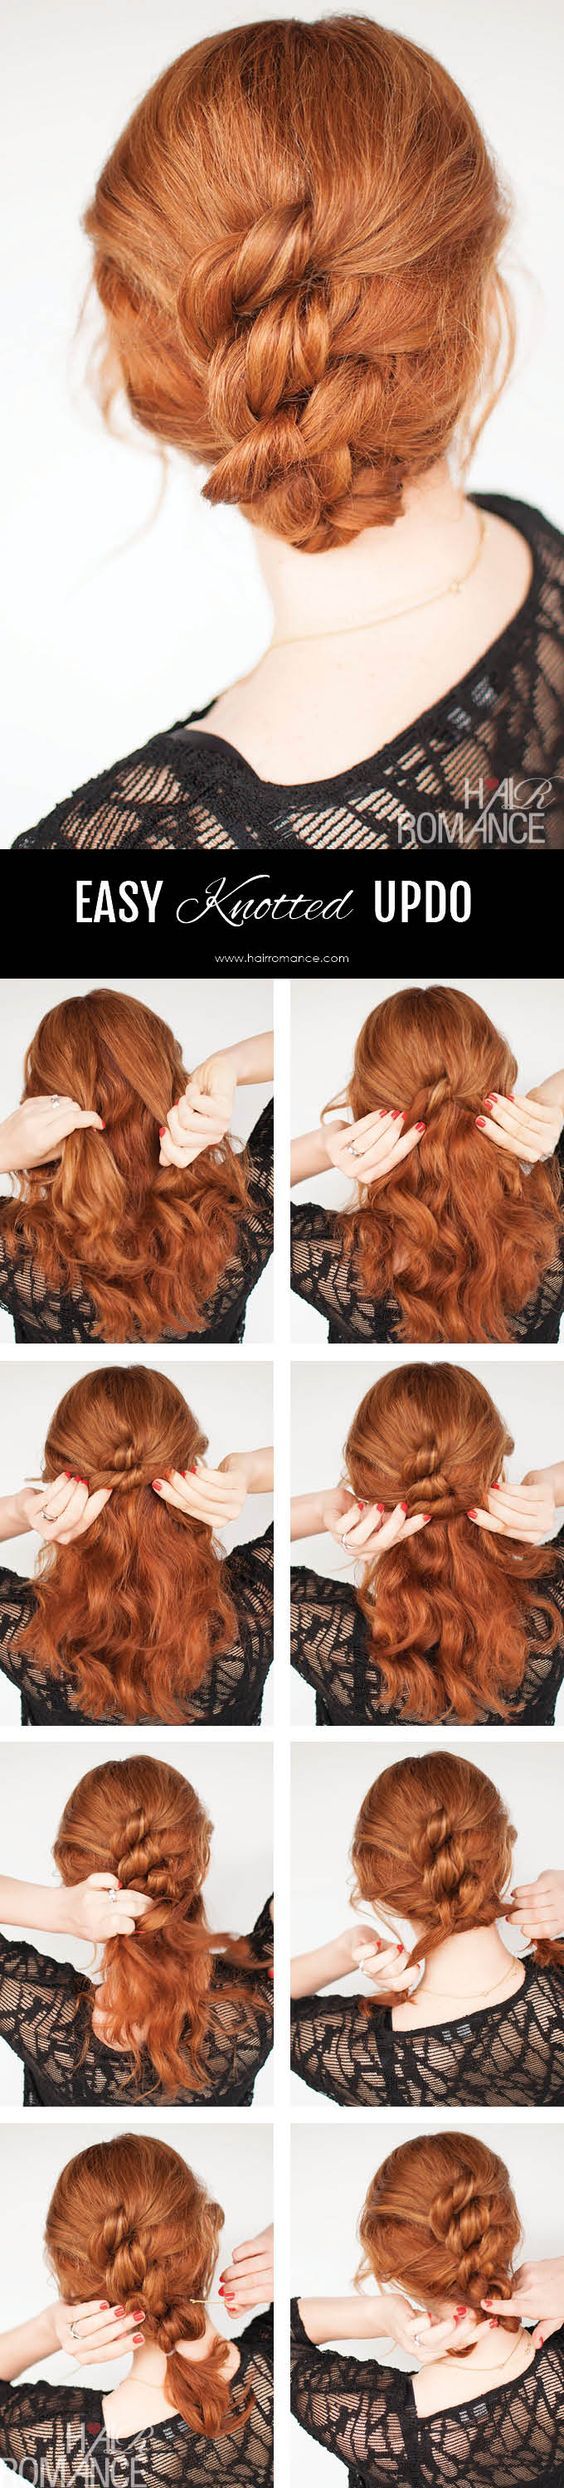 Easy knot updo hair tutorial